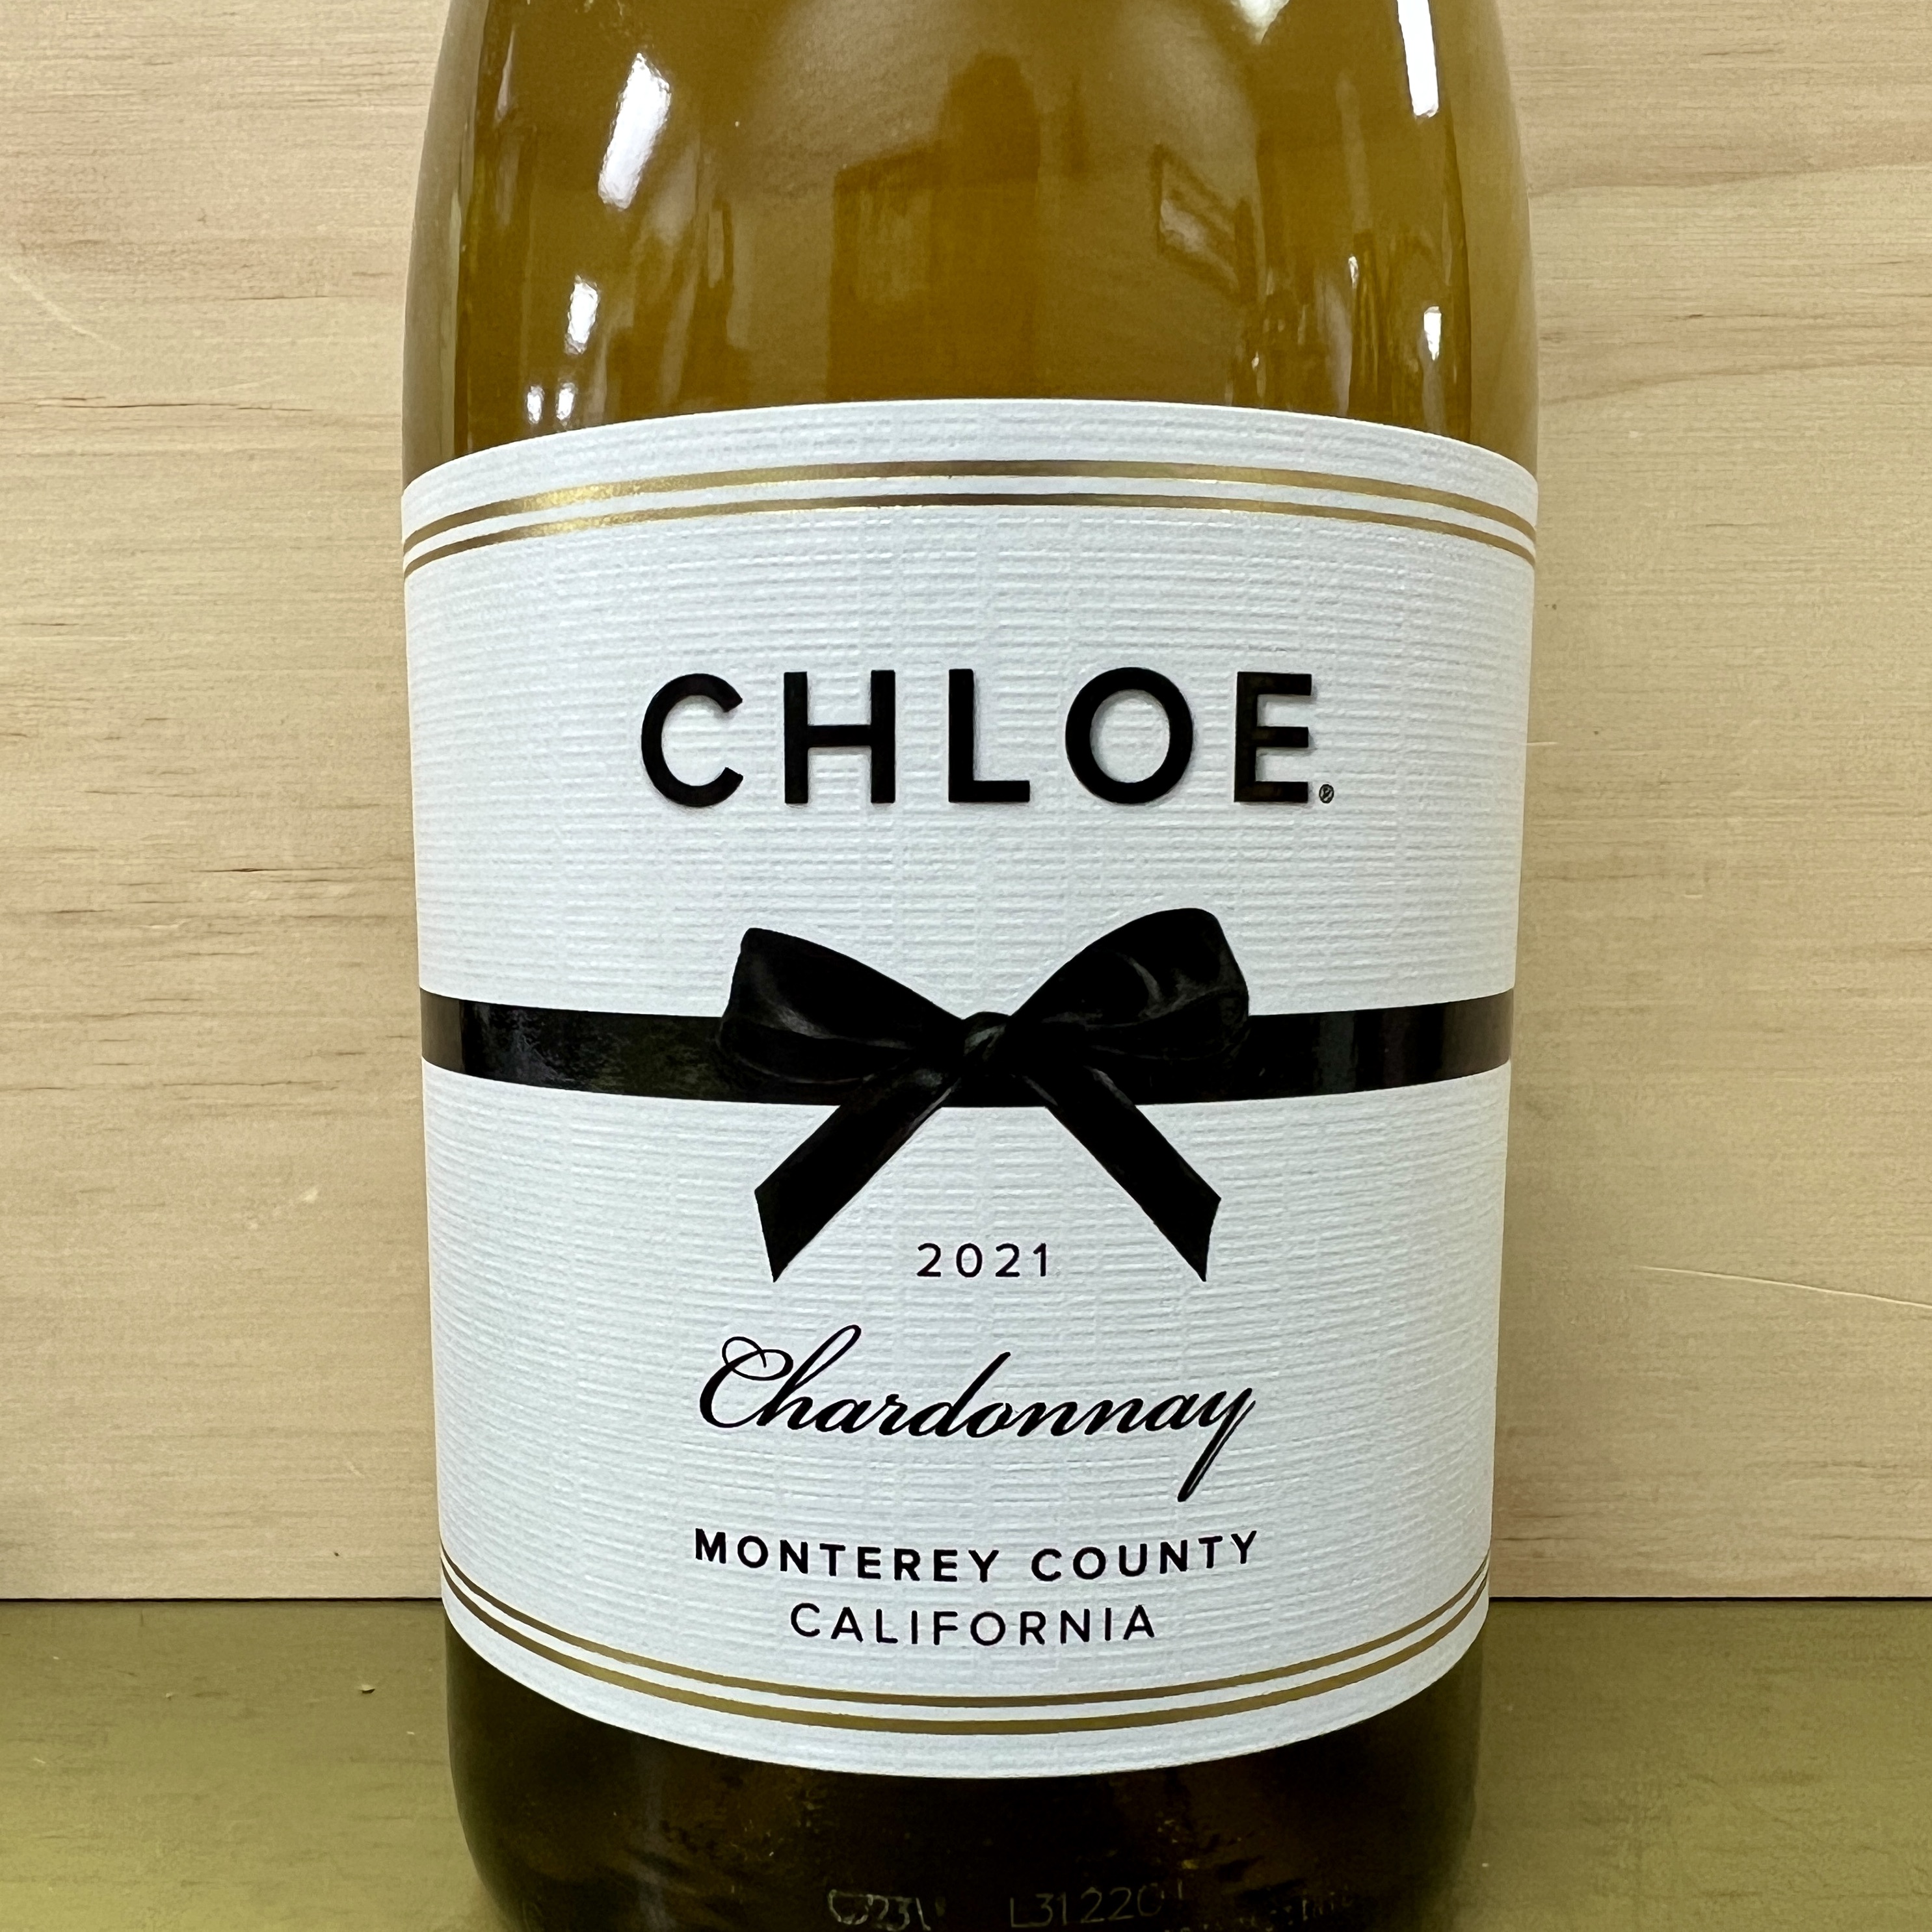 Chloe Monterey County Chardonnay 2021